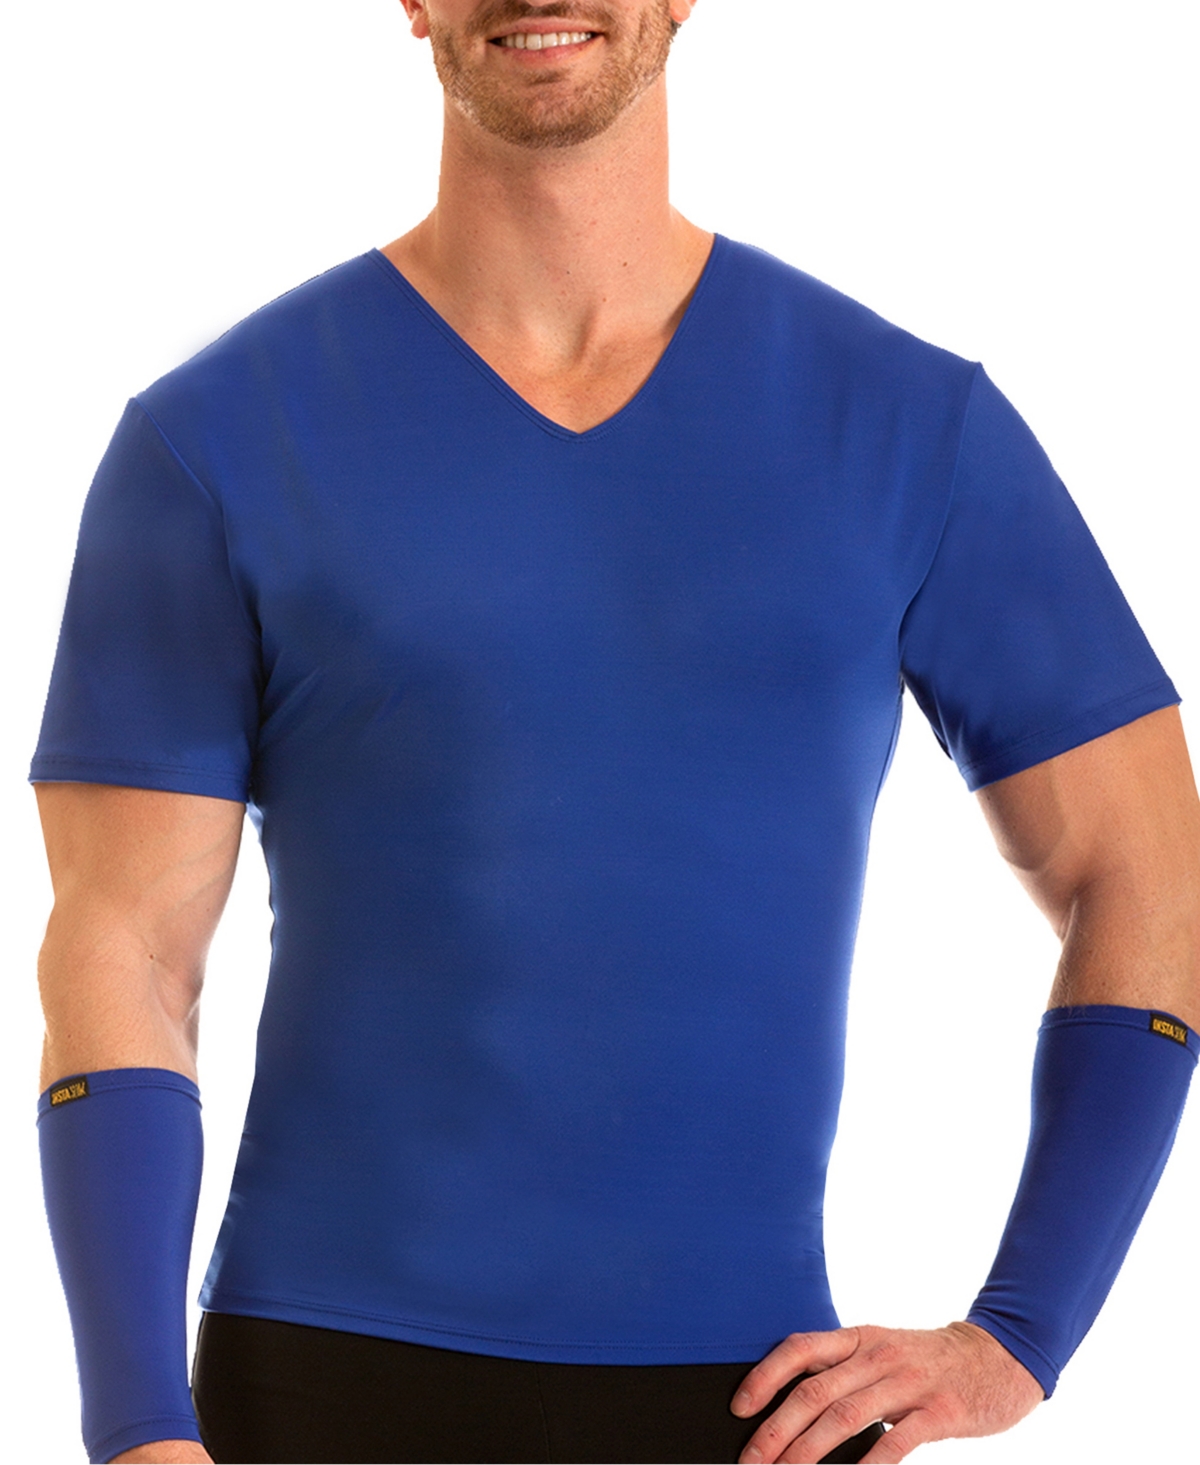 Men's Compression Activewear Short Sleeve V-Neck T-shirt - Army